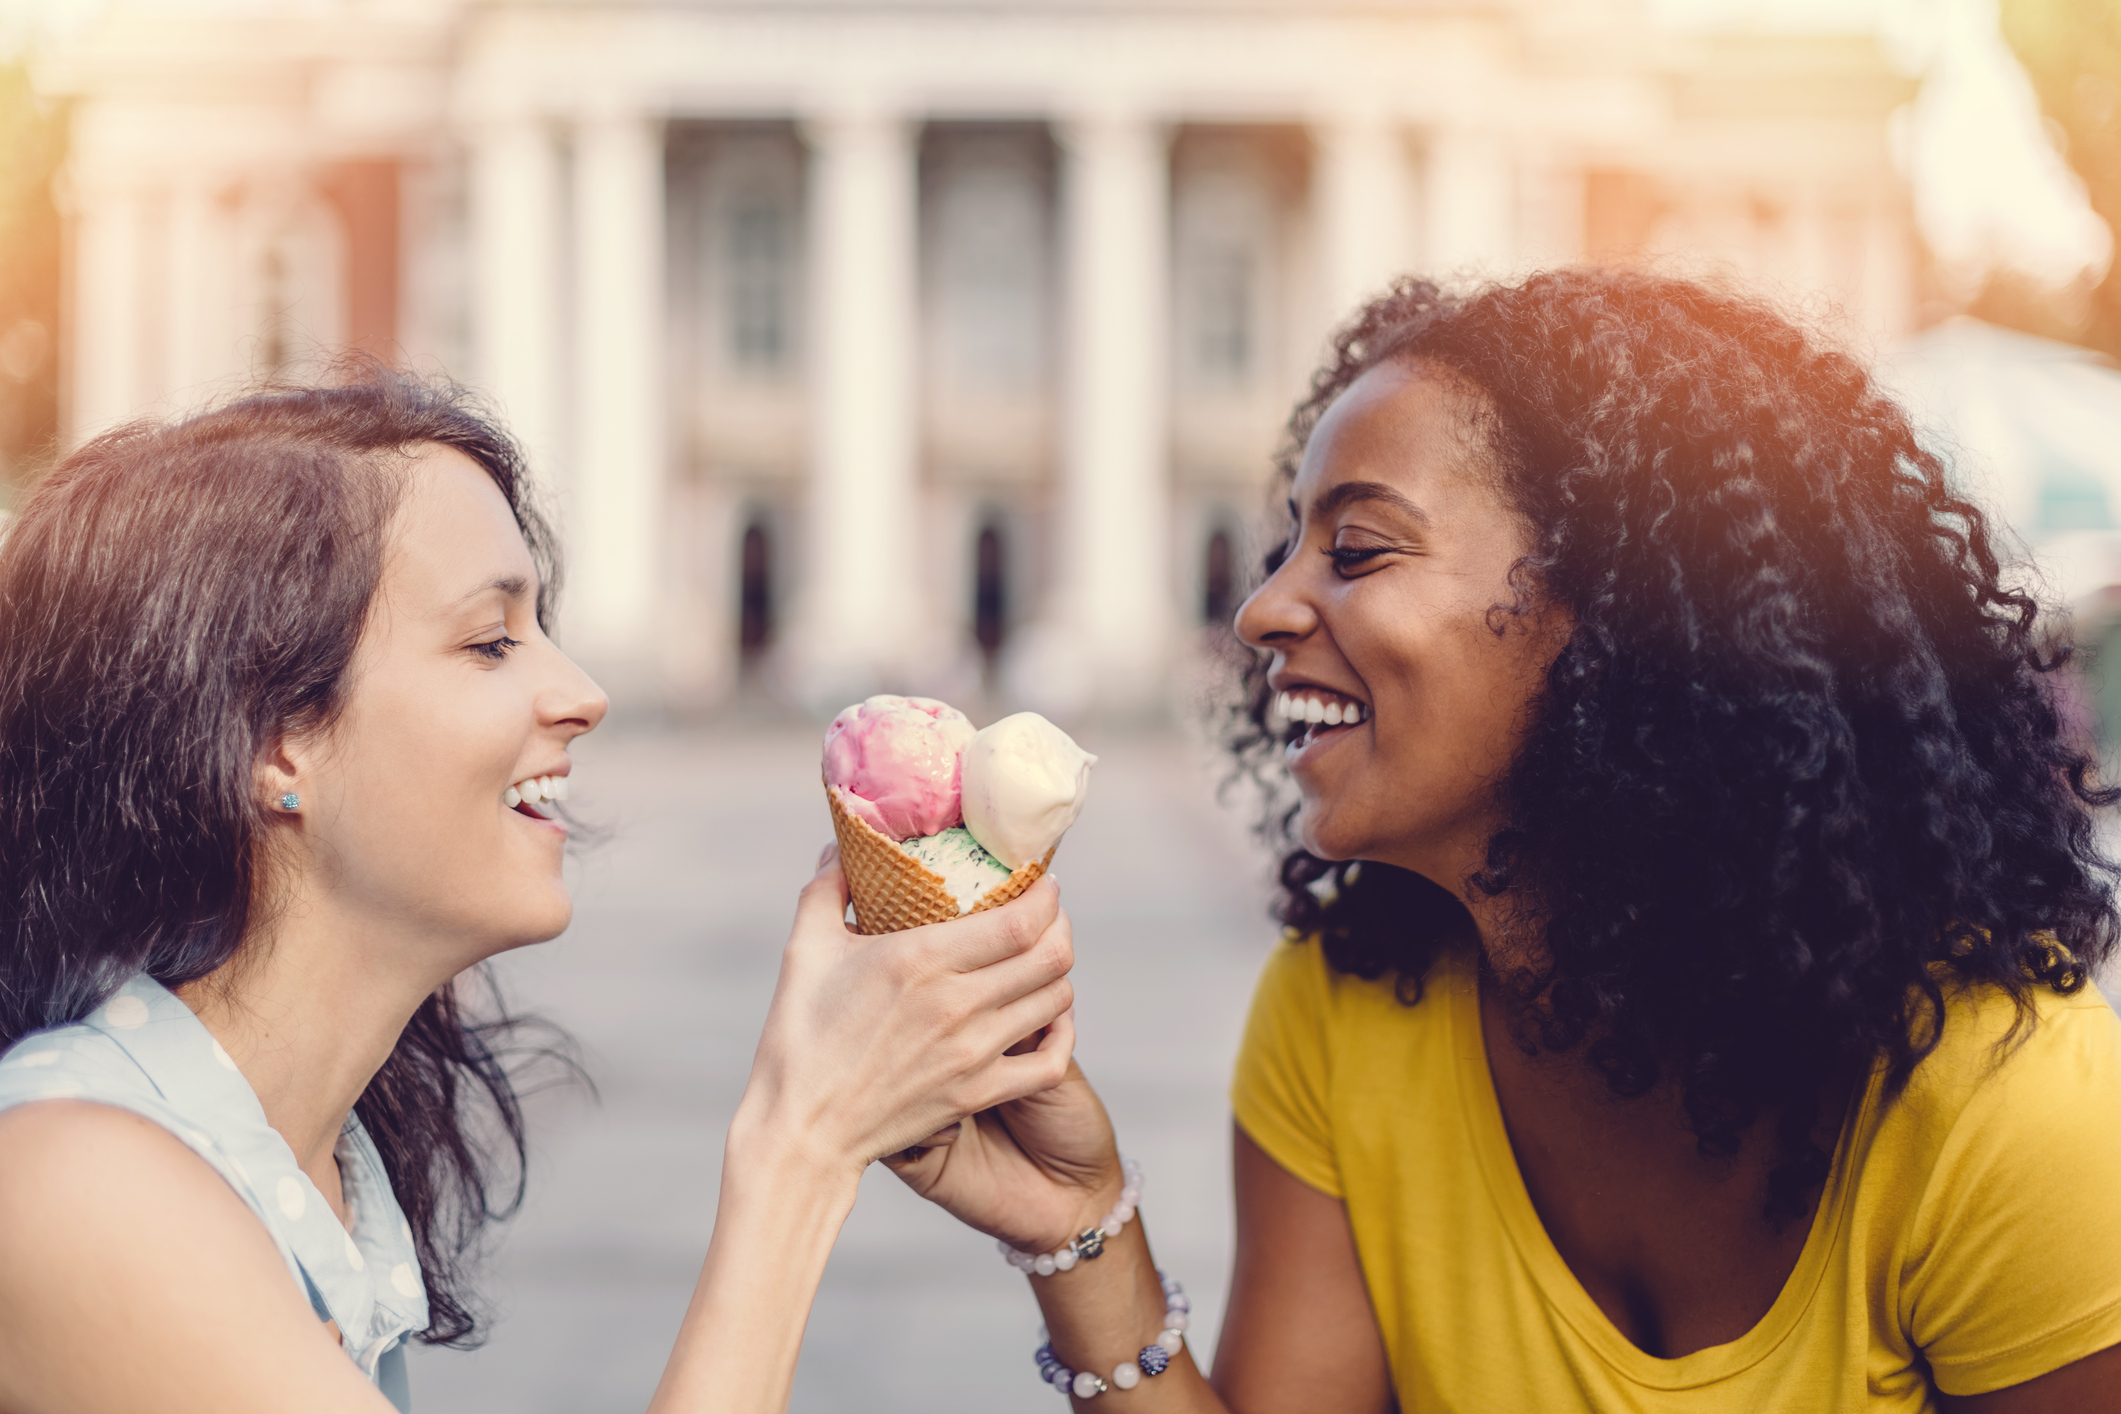 Happy girls sharing an ice cream